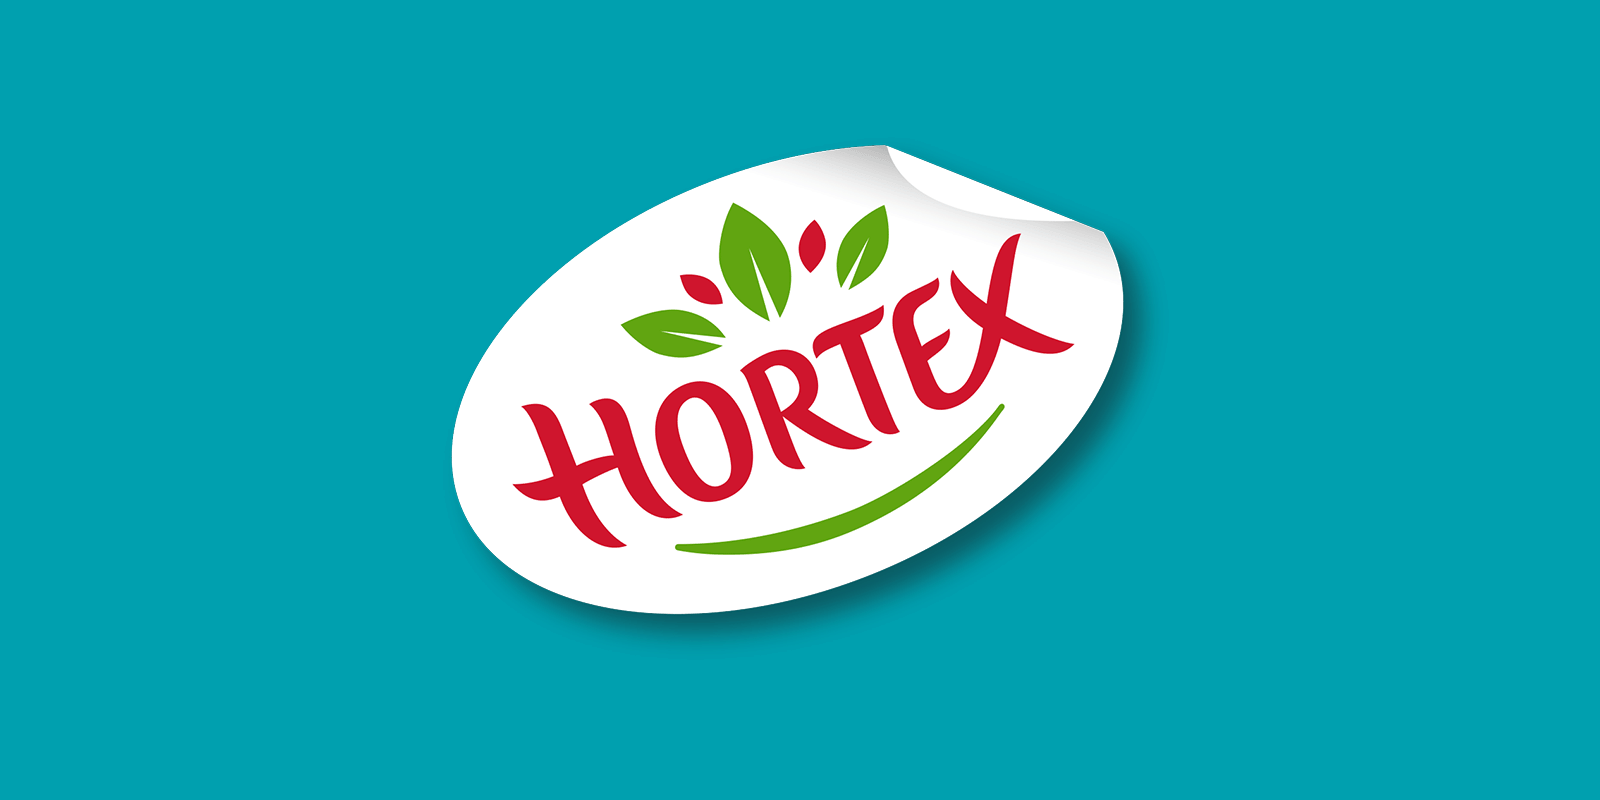 HORTEX rozstrzygnął przetarg przetarg MEDIARUN COM AI HORTEX LOGO